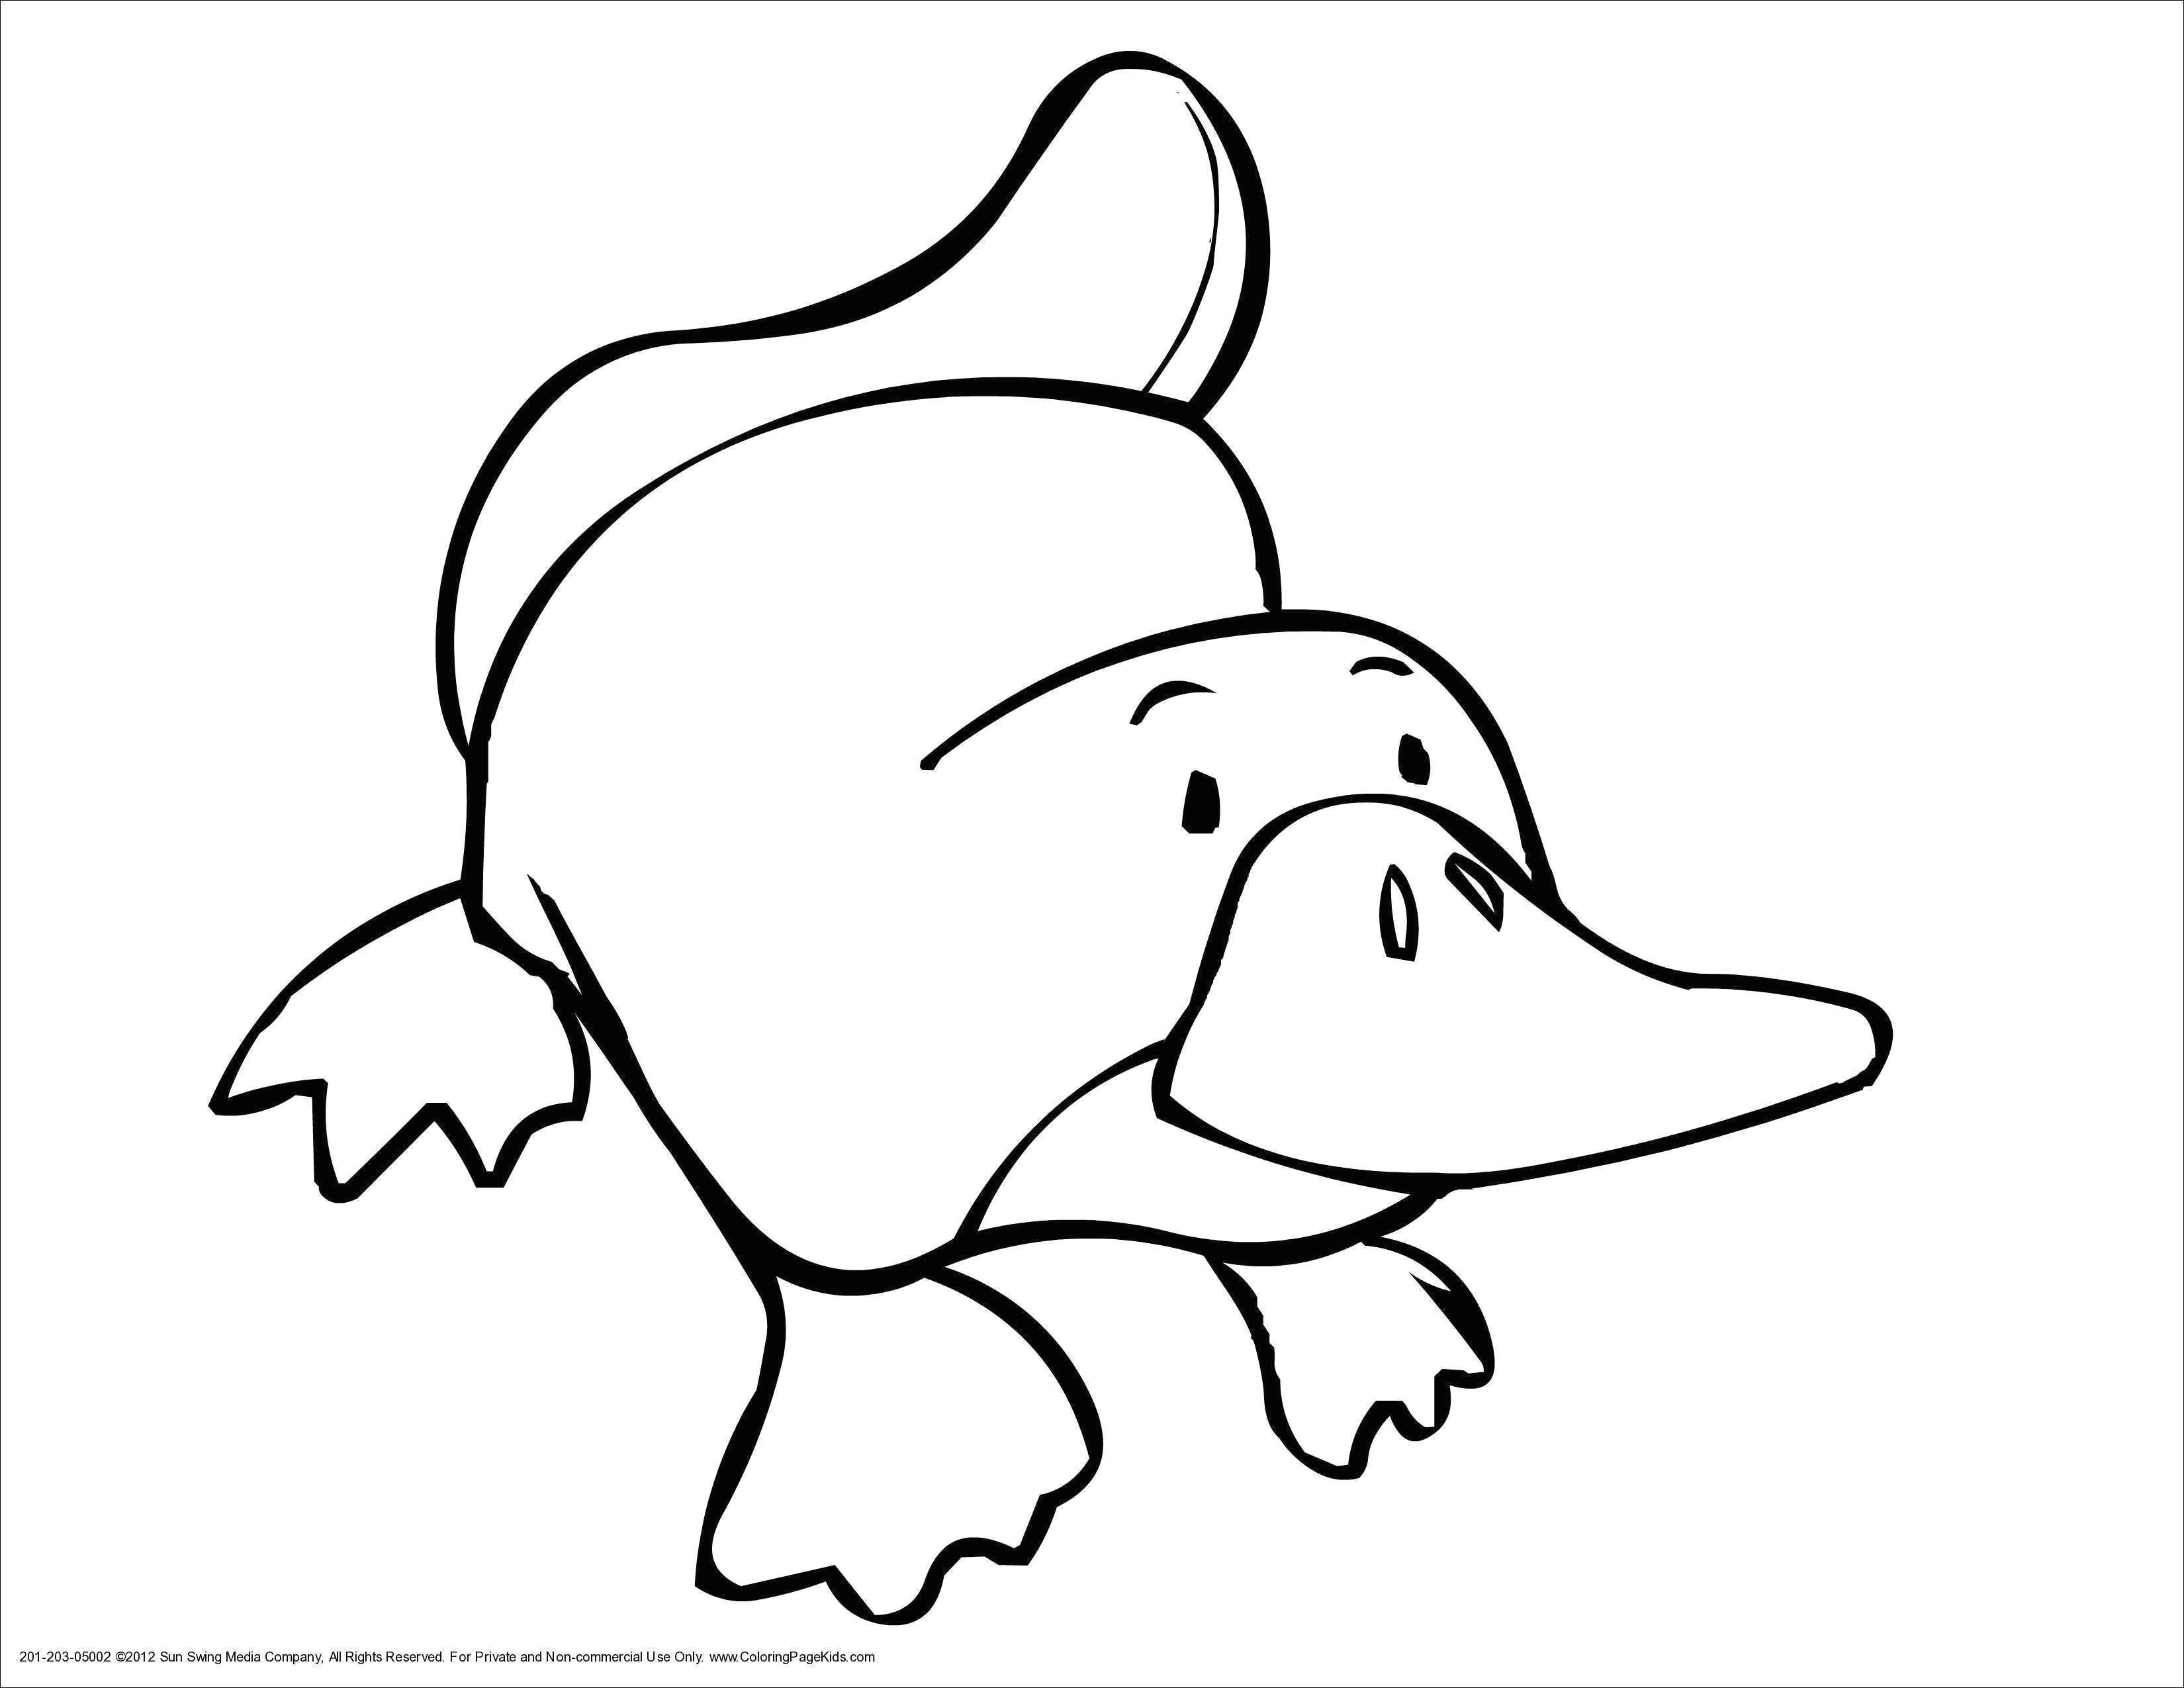 Drawing Cartoons 3d Ausmalbilder Erwachsene Eule Image Coloring Pages Animals Preschool